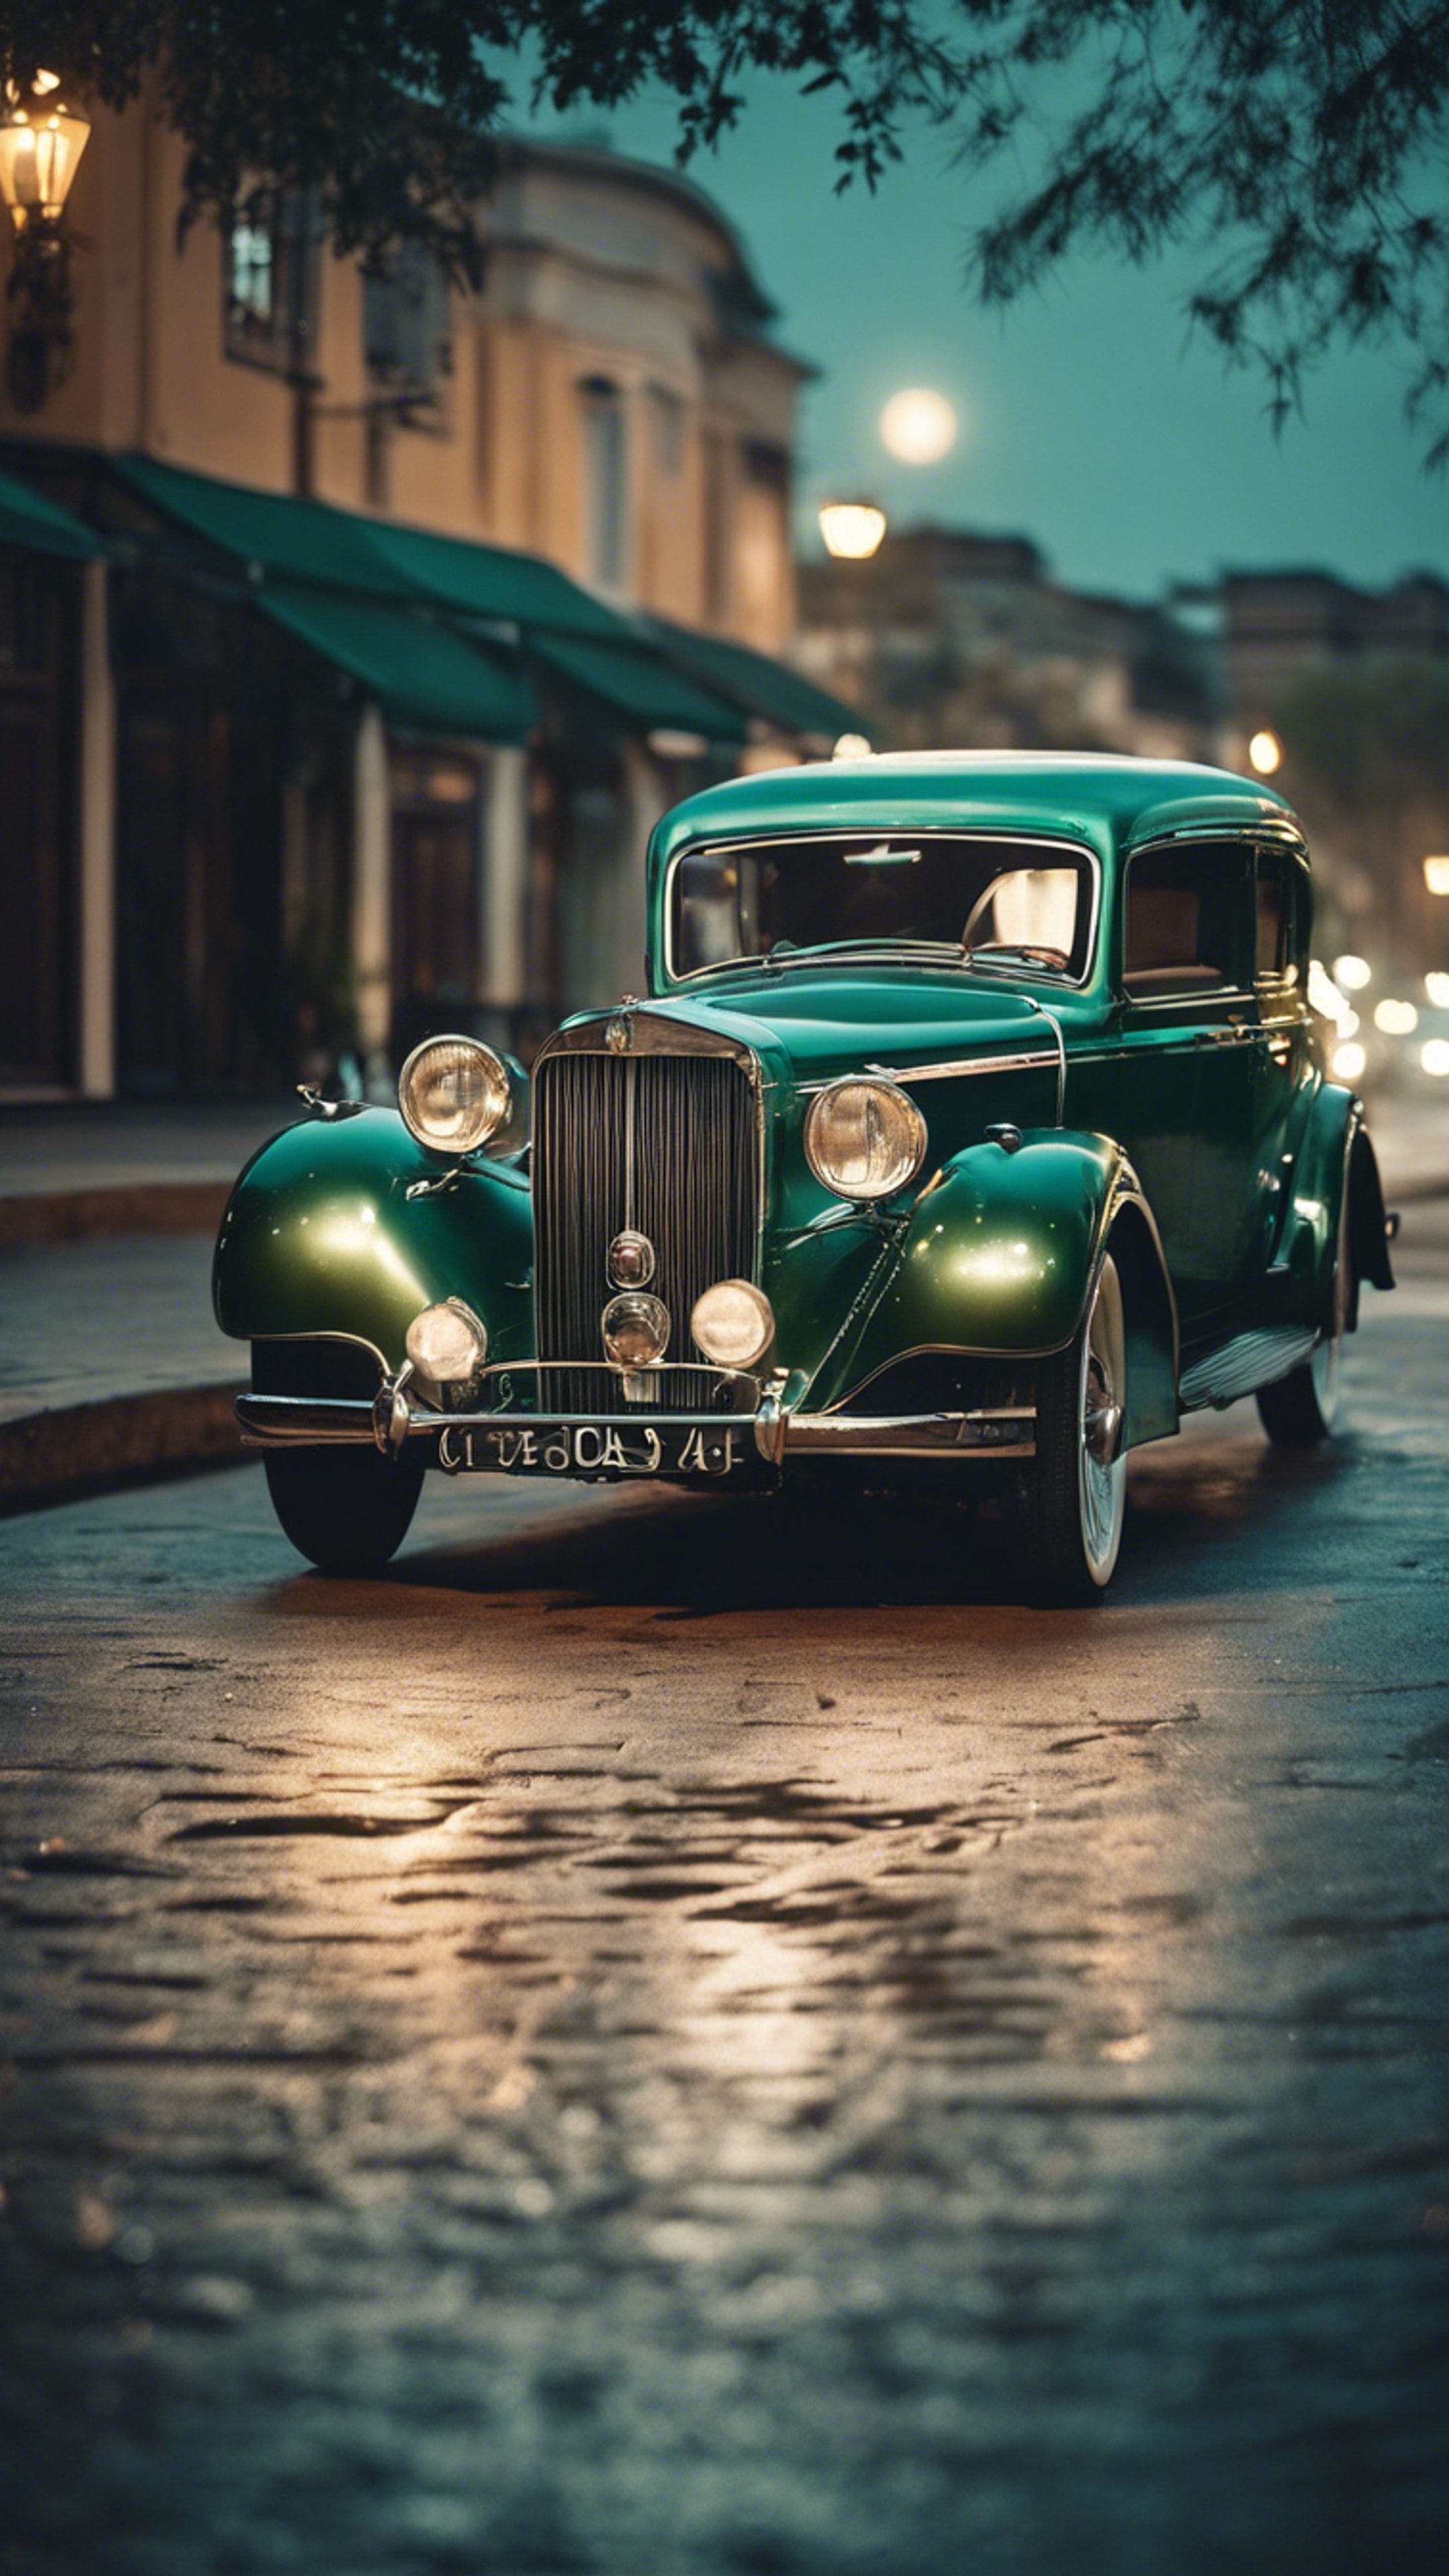 A luxurious antique car painted in cool dark green under the moonlight. Tapeta[5cdba2e68b66456f8c5a]